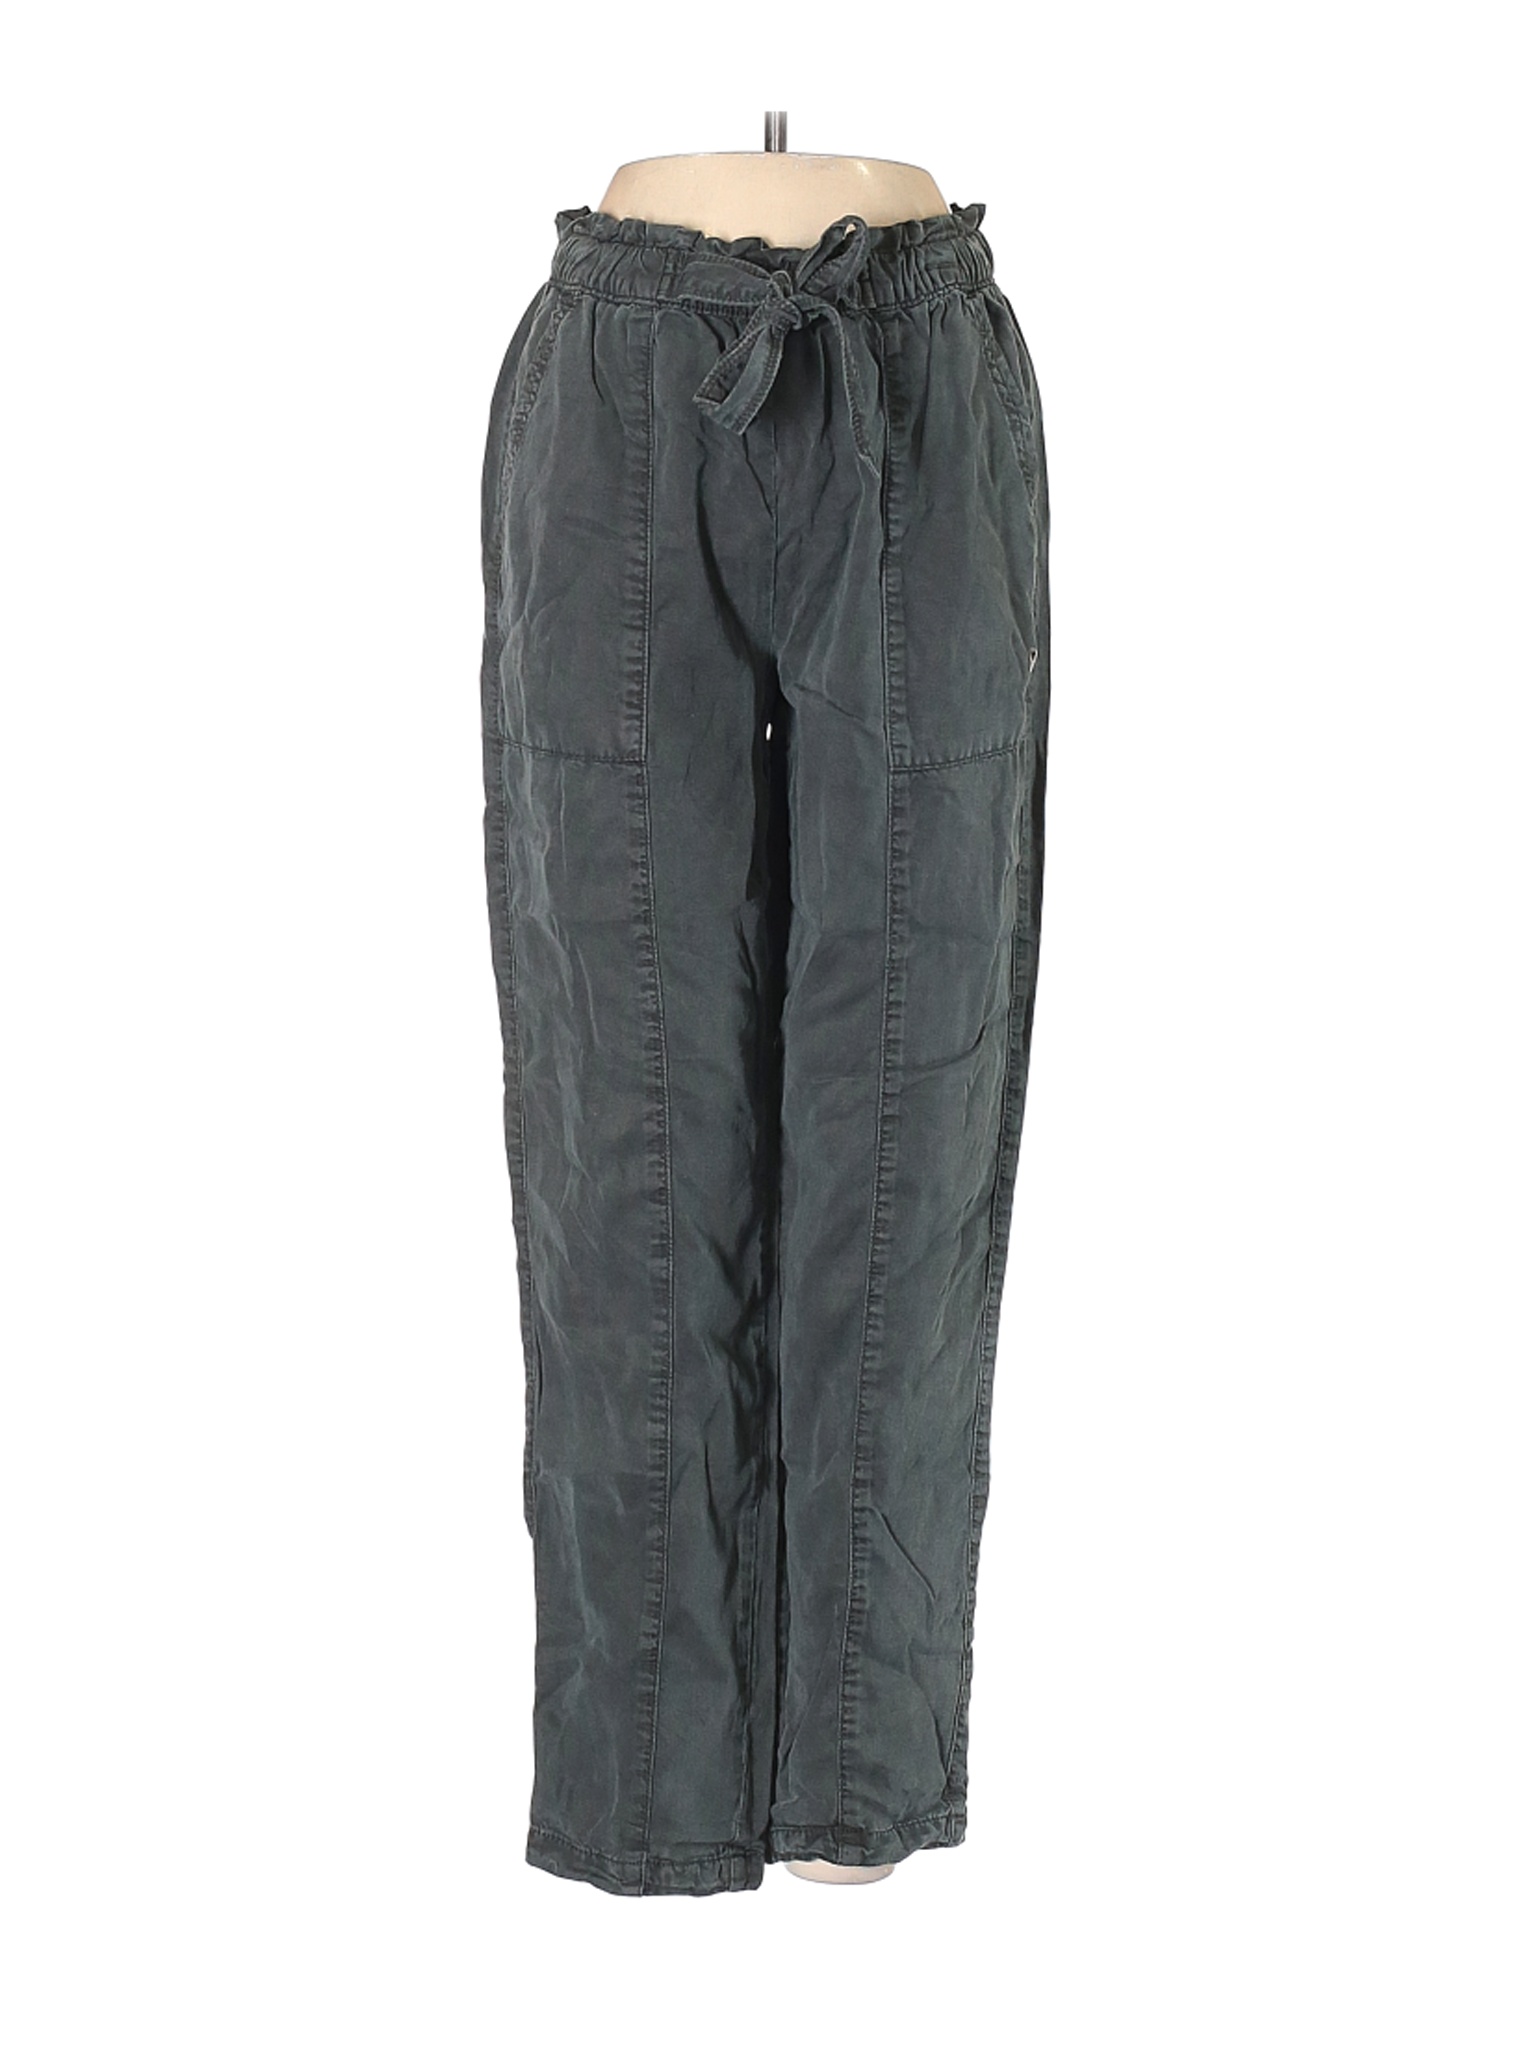 NWT Aerie Women Gray Casual Pants XS | eBay